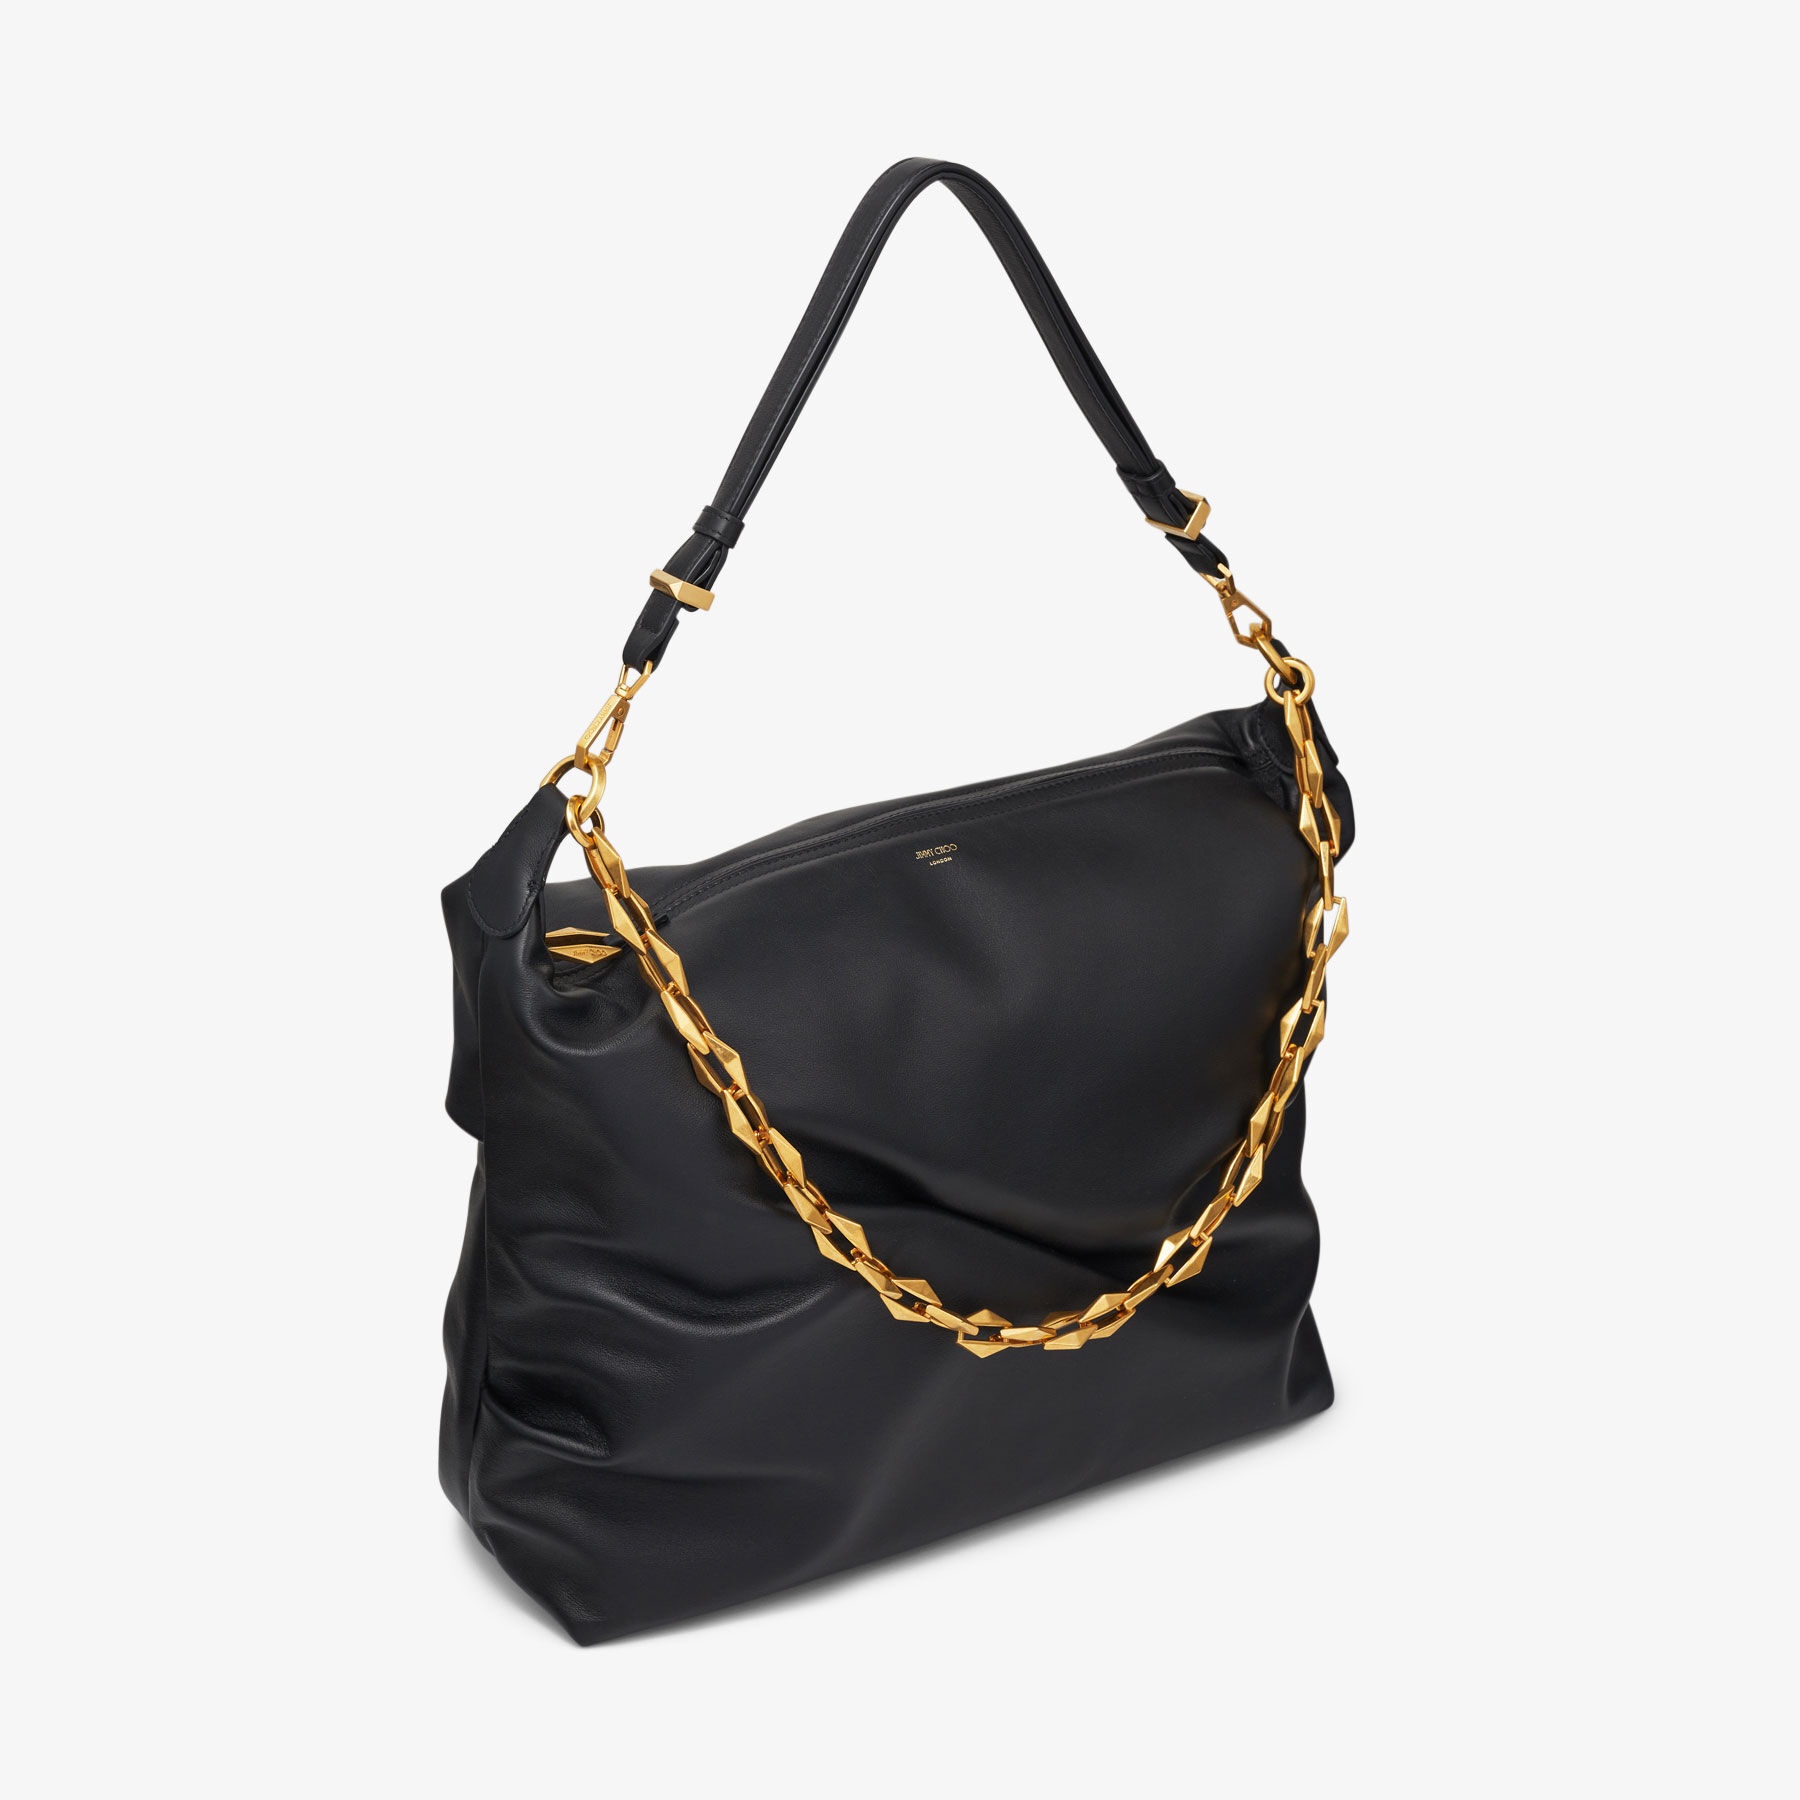 Diamond Soft Hobo M
Black Soft Calf Leather Hobo Bag with Chain Strap - 3